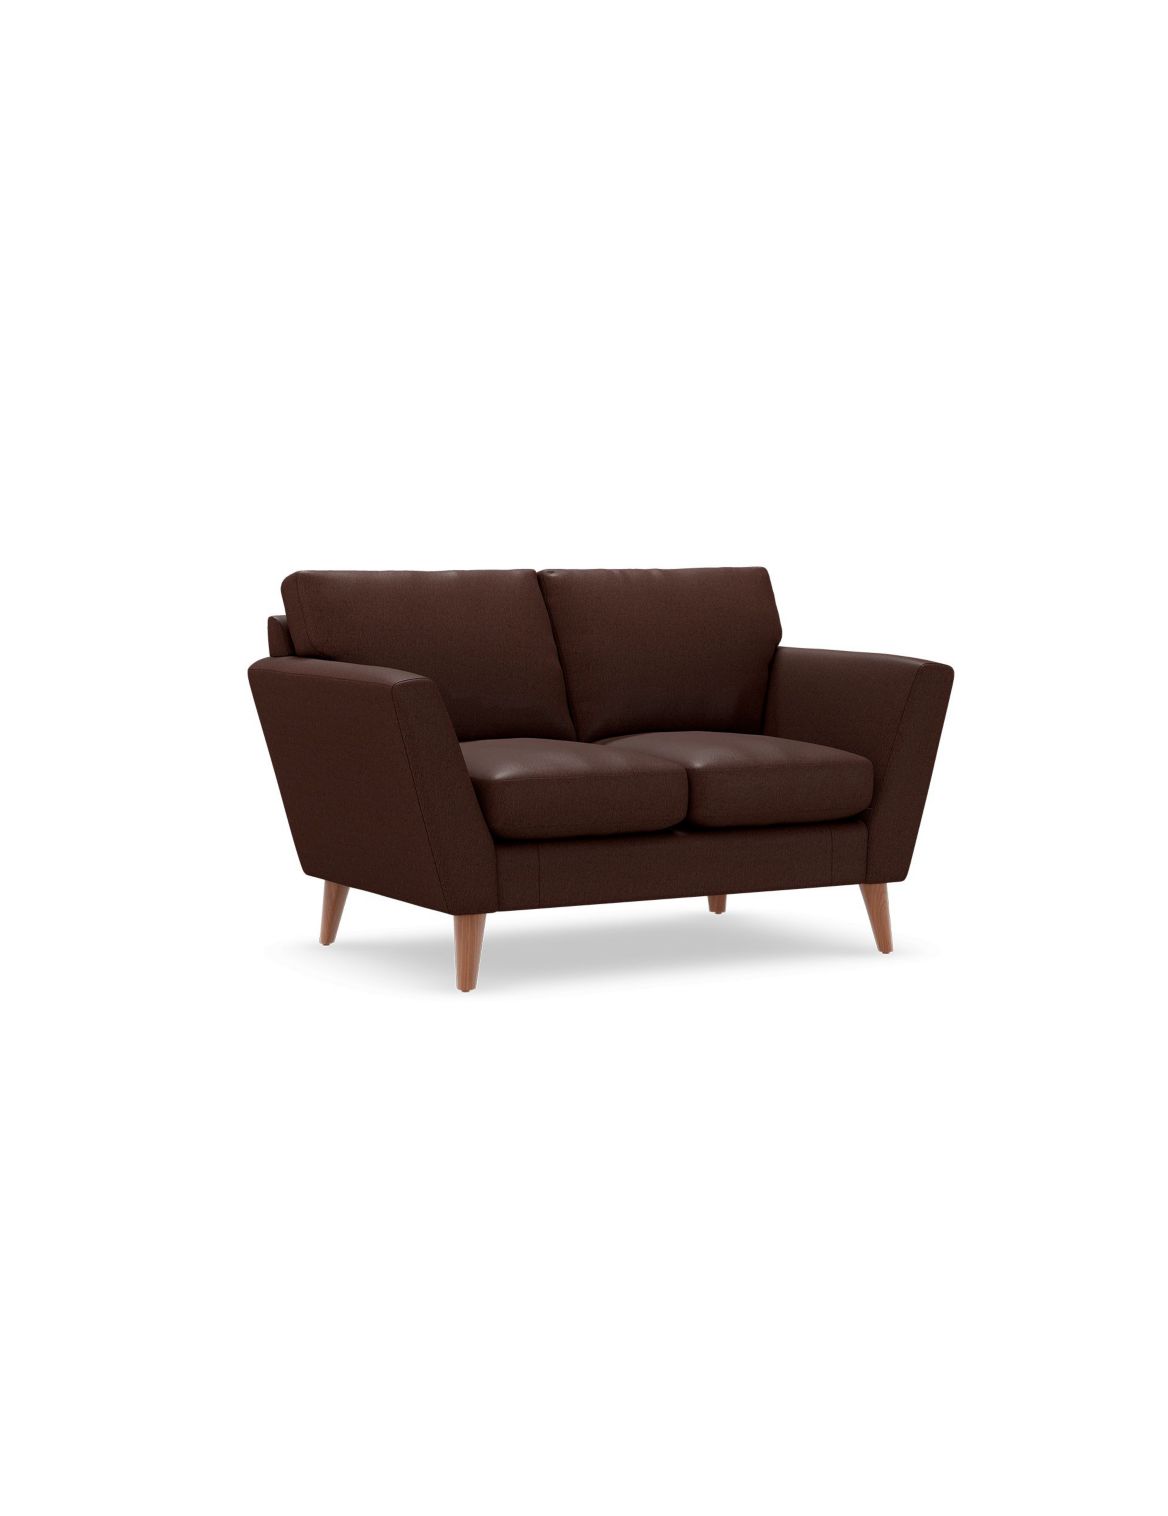 Foxbury Compact Sofa brown